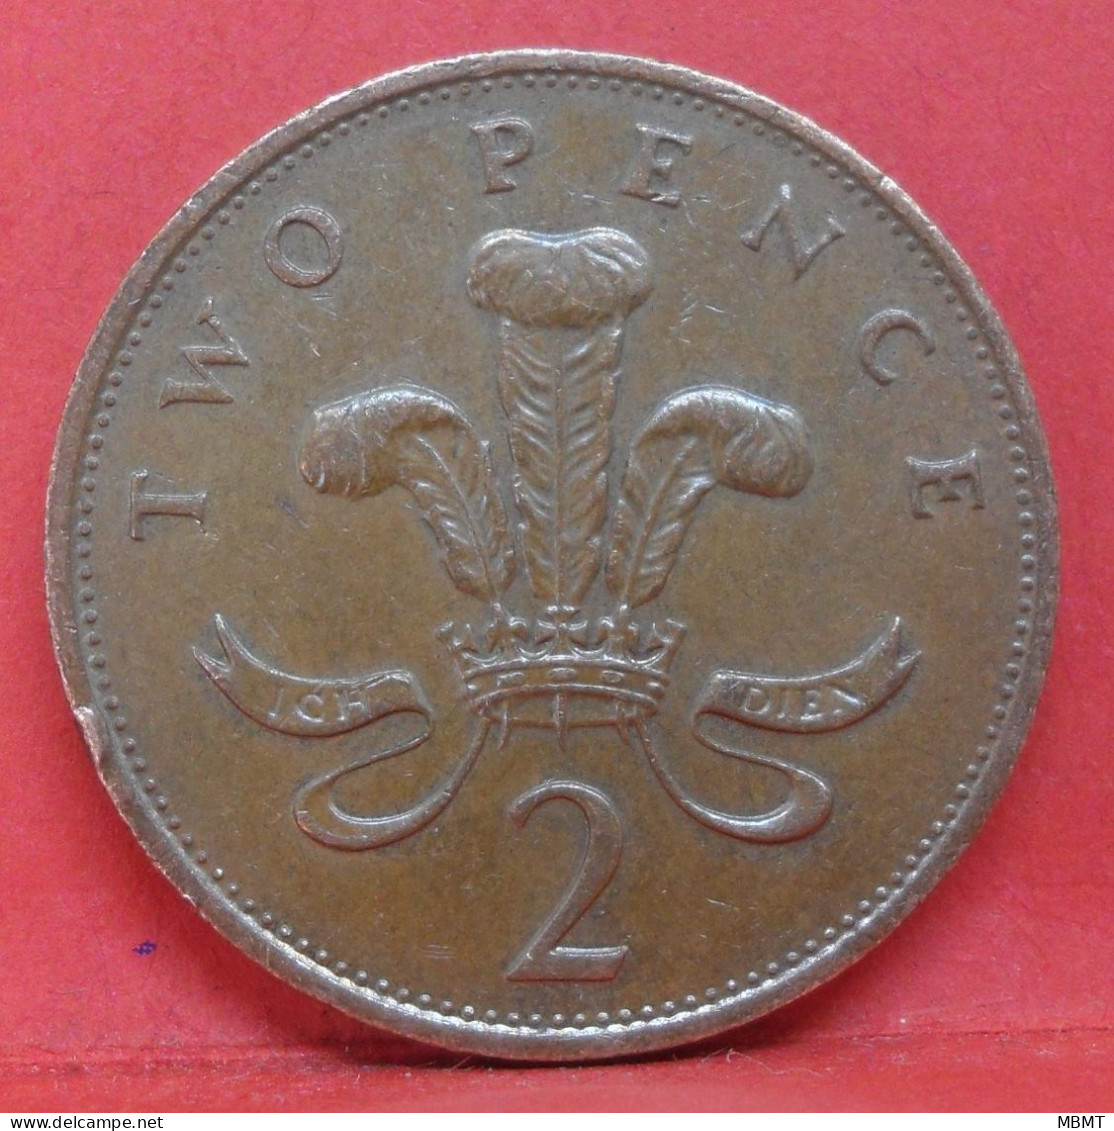 2 Pence 1990 - TTB - Pièce Monnaie Grande-Bretagne - Article N°2711 - 2 Pence & 2 New Pence